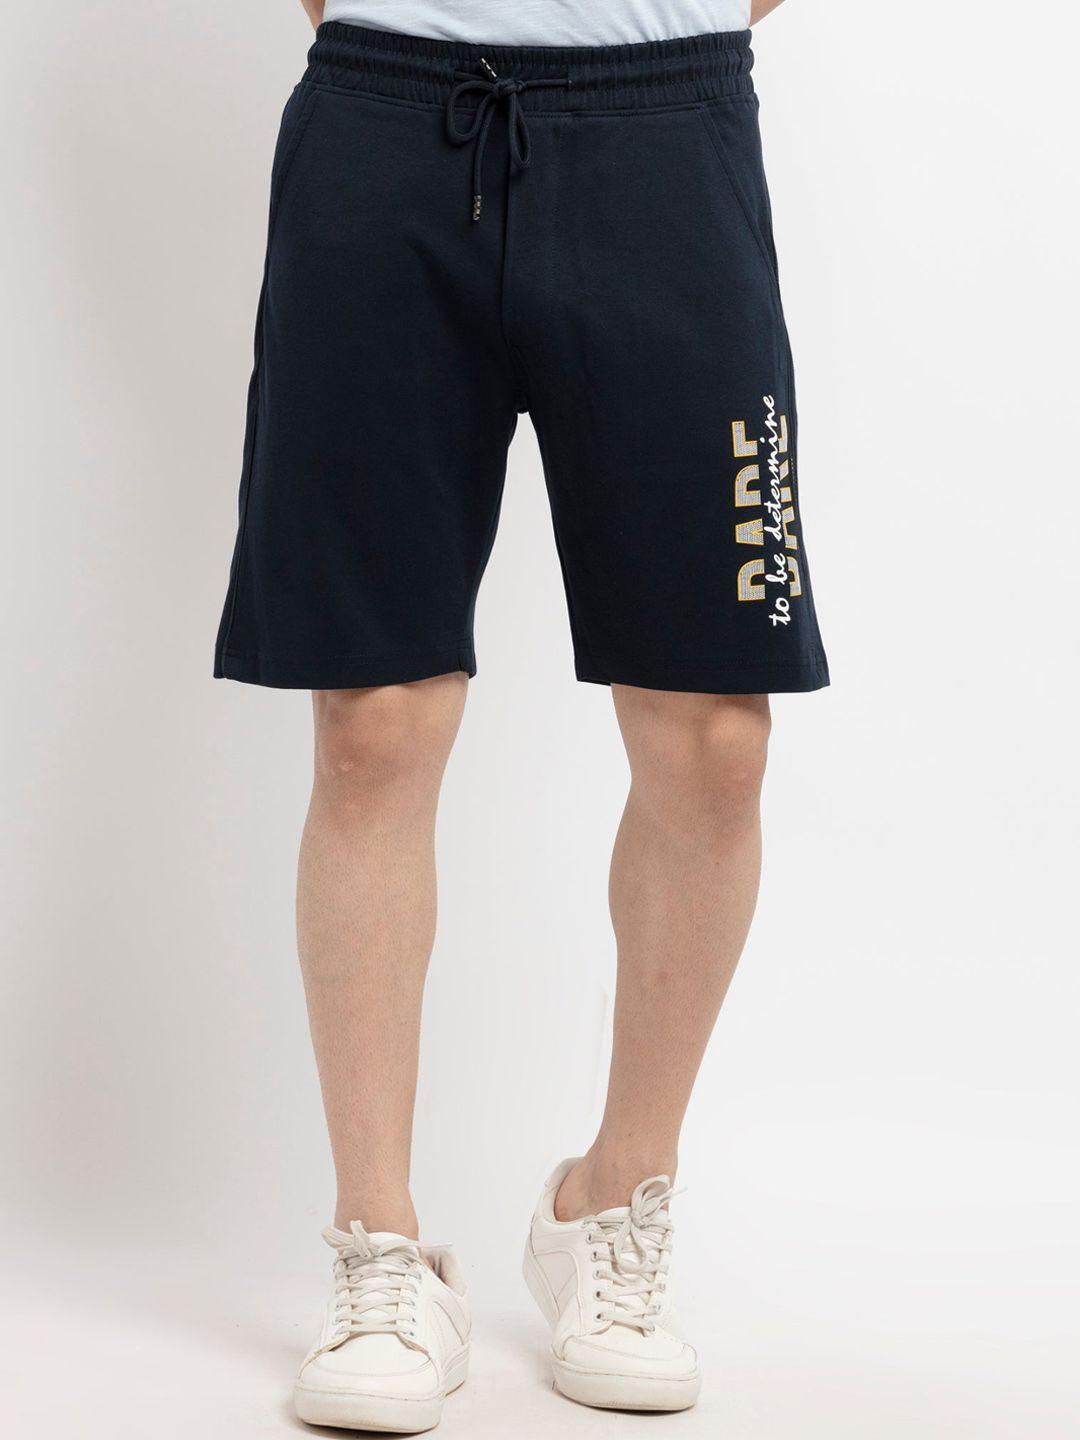 status quo men navy blue regular shorts